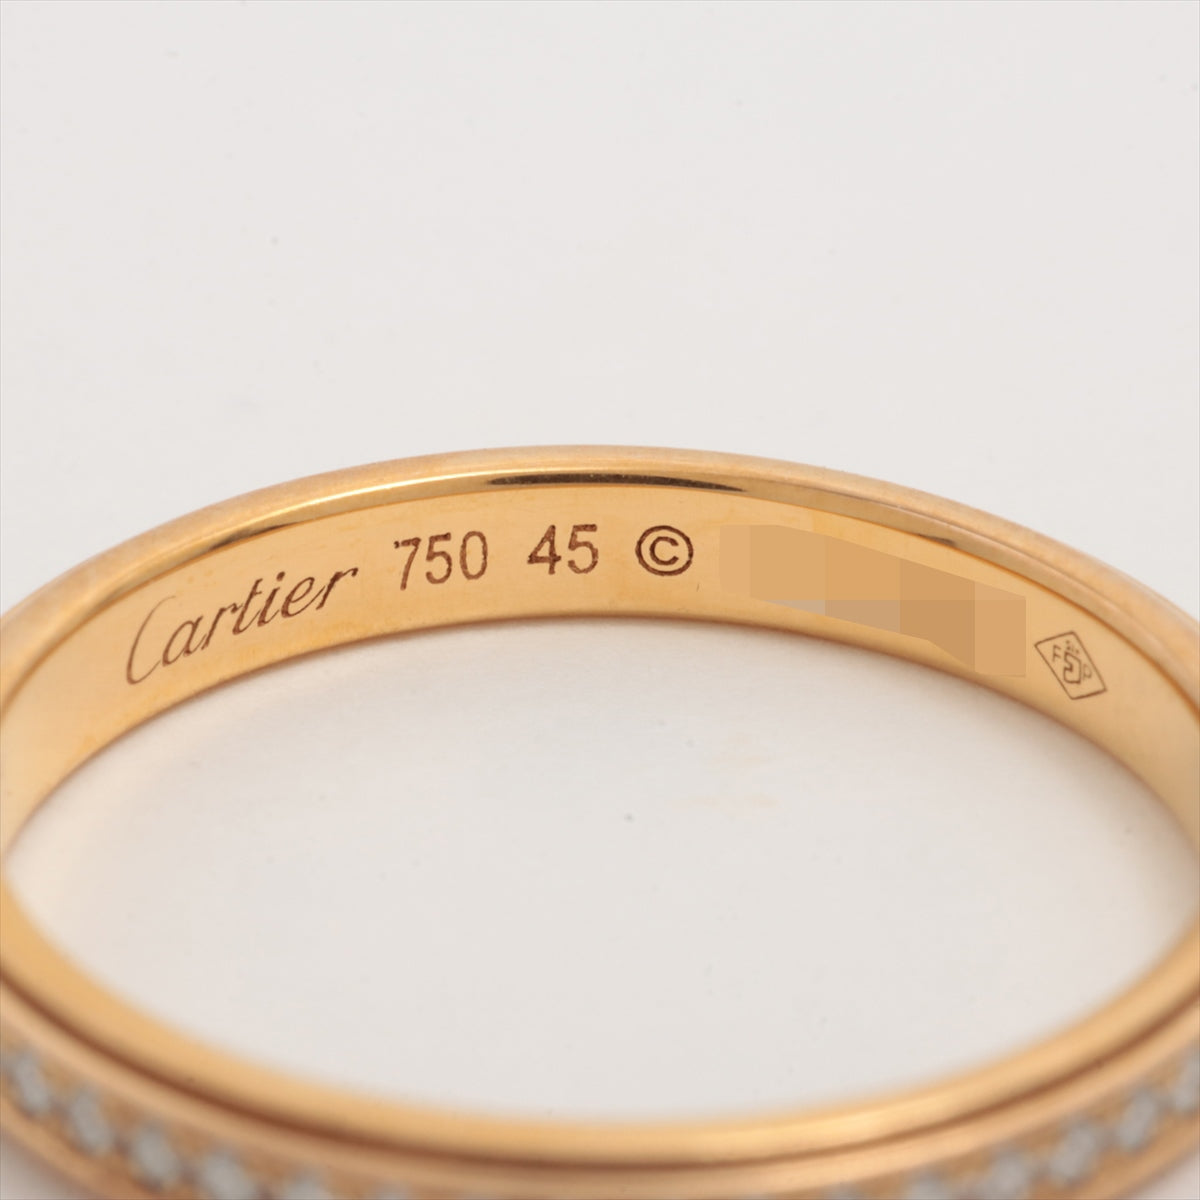 Cartier Damenuhr wedding full diamond rings 750(PG) 1.4g 45